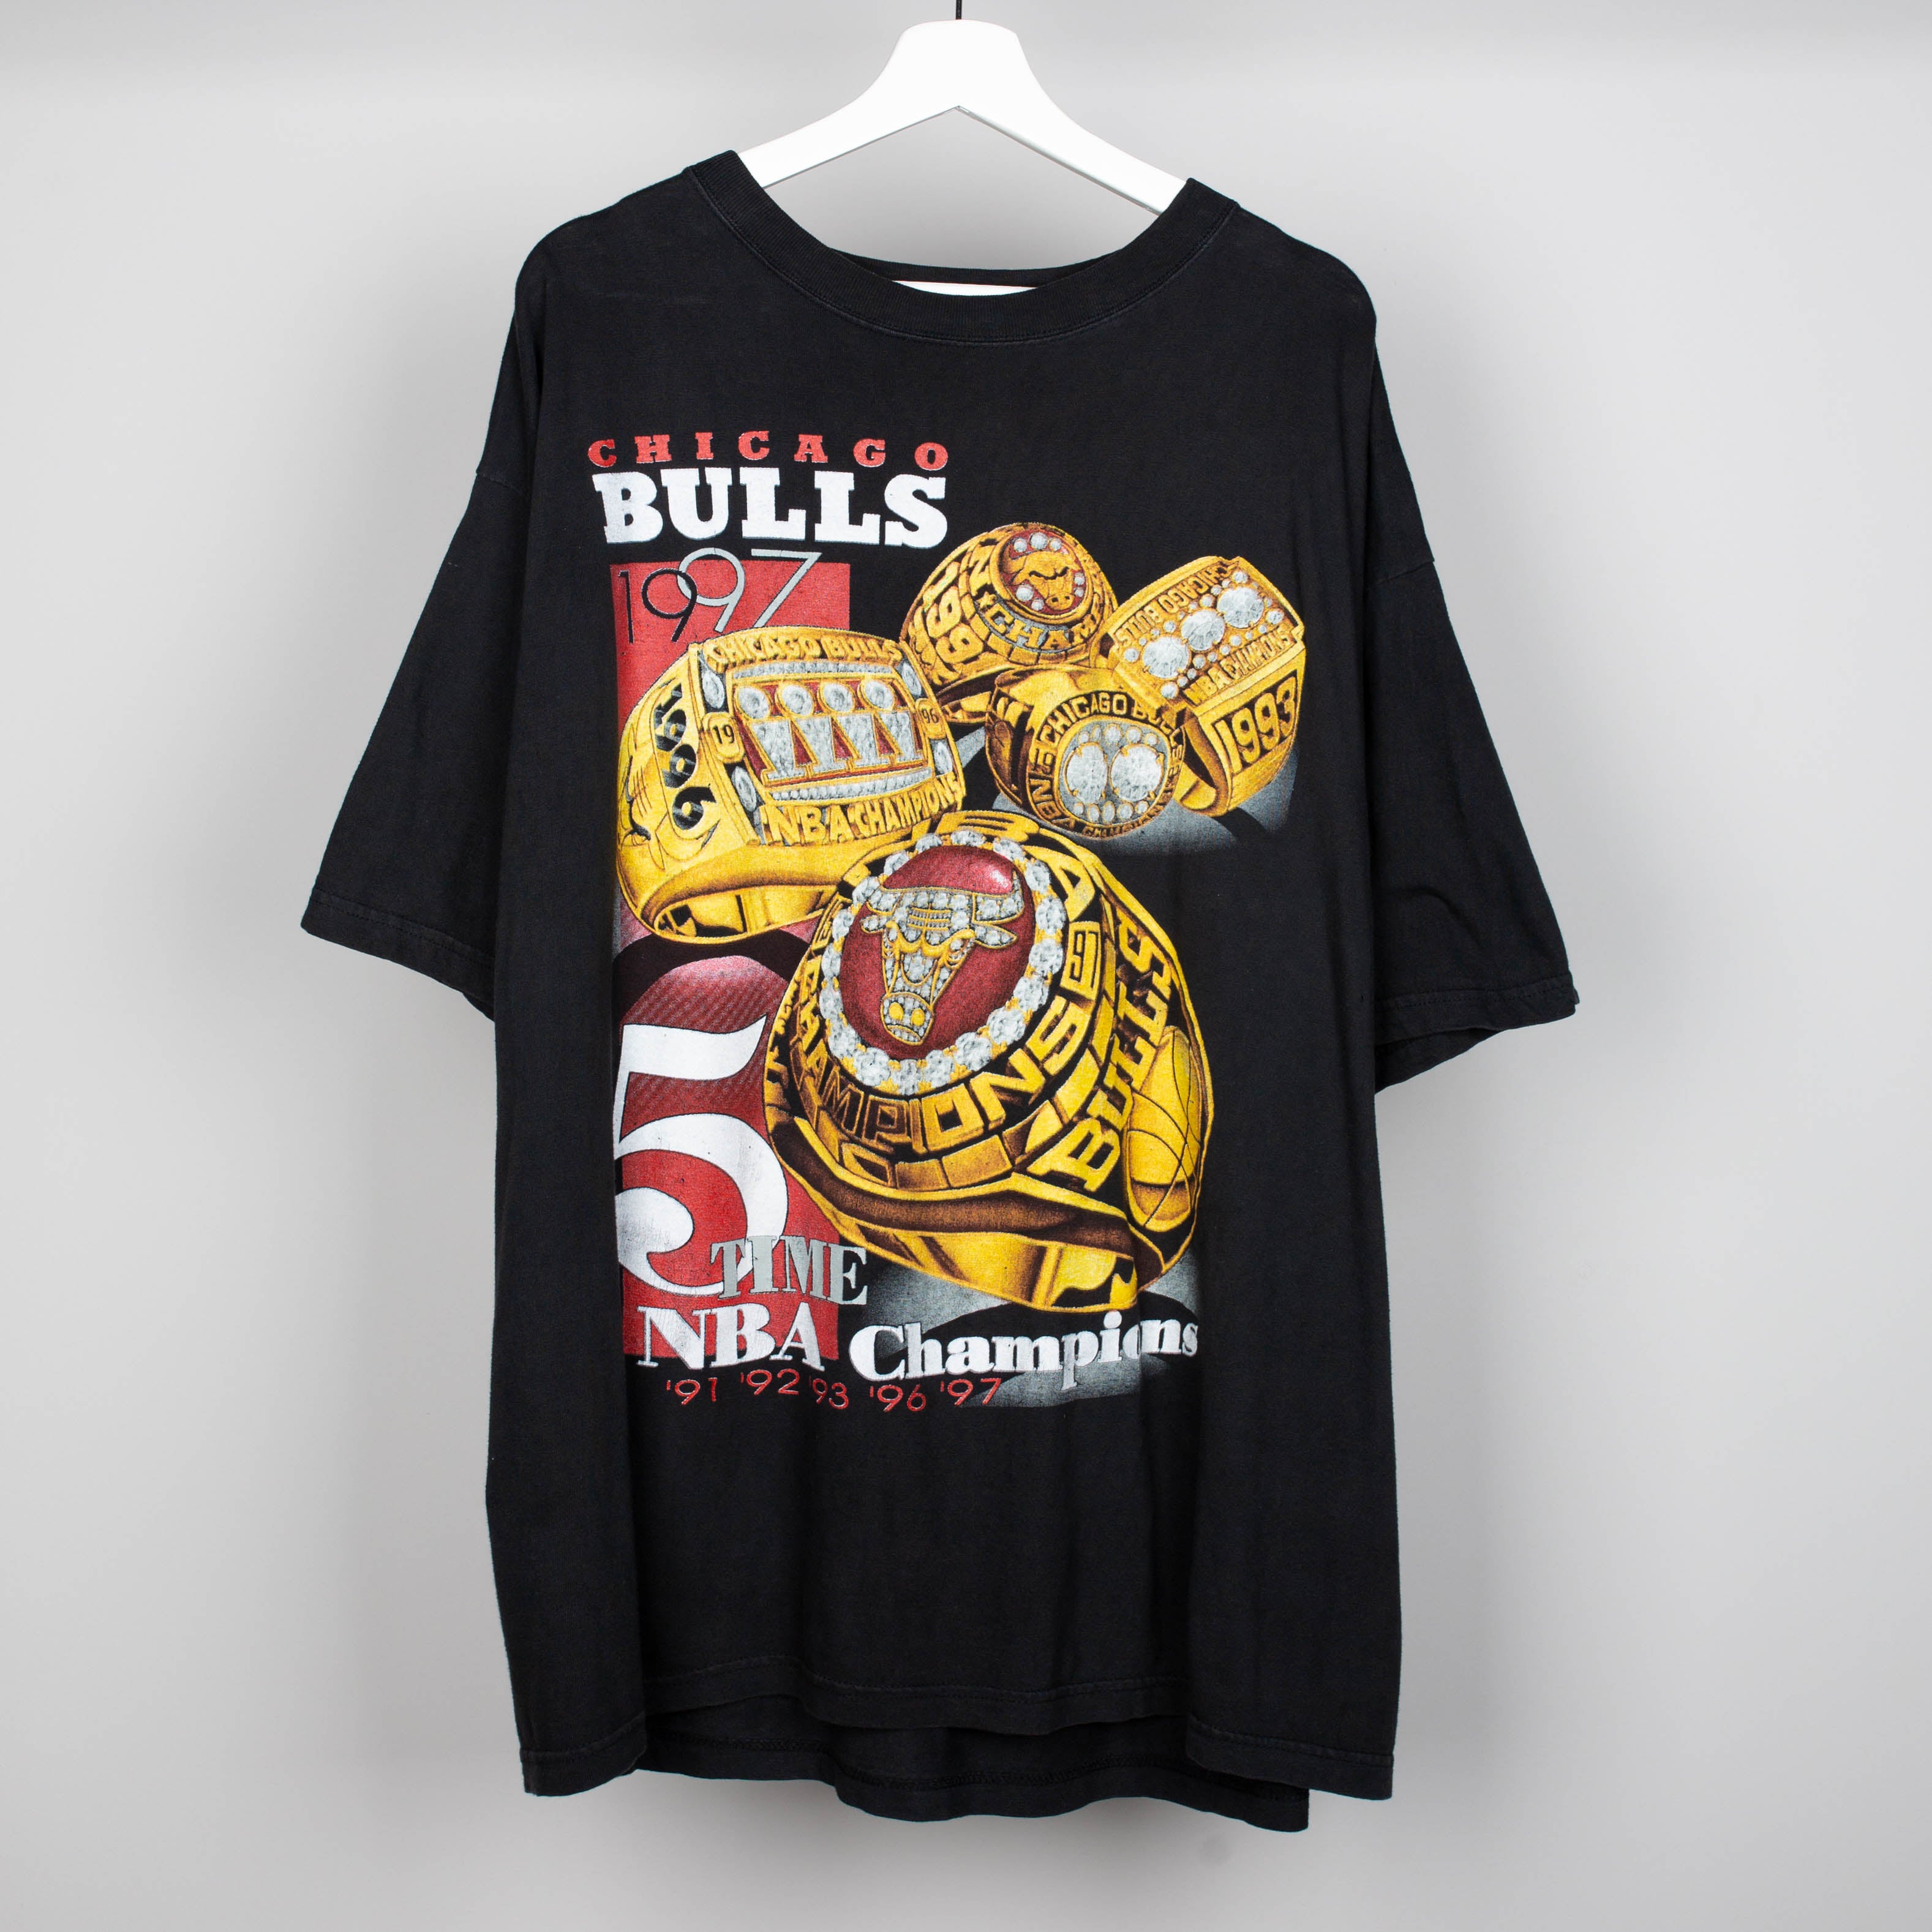 Pro Standard Bulls Champ Ring T-Shirt